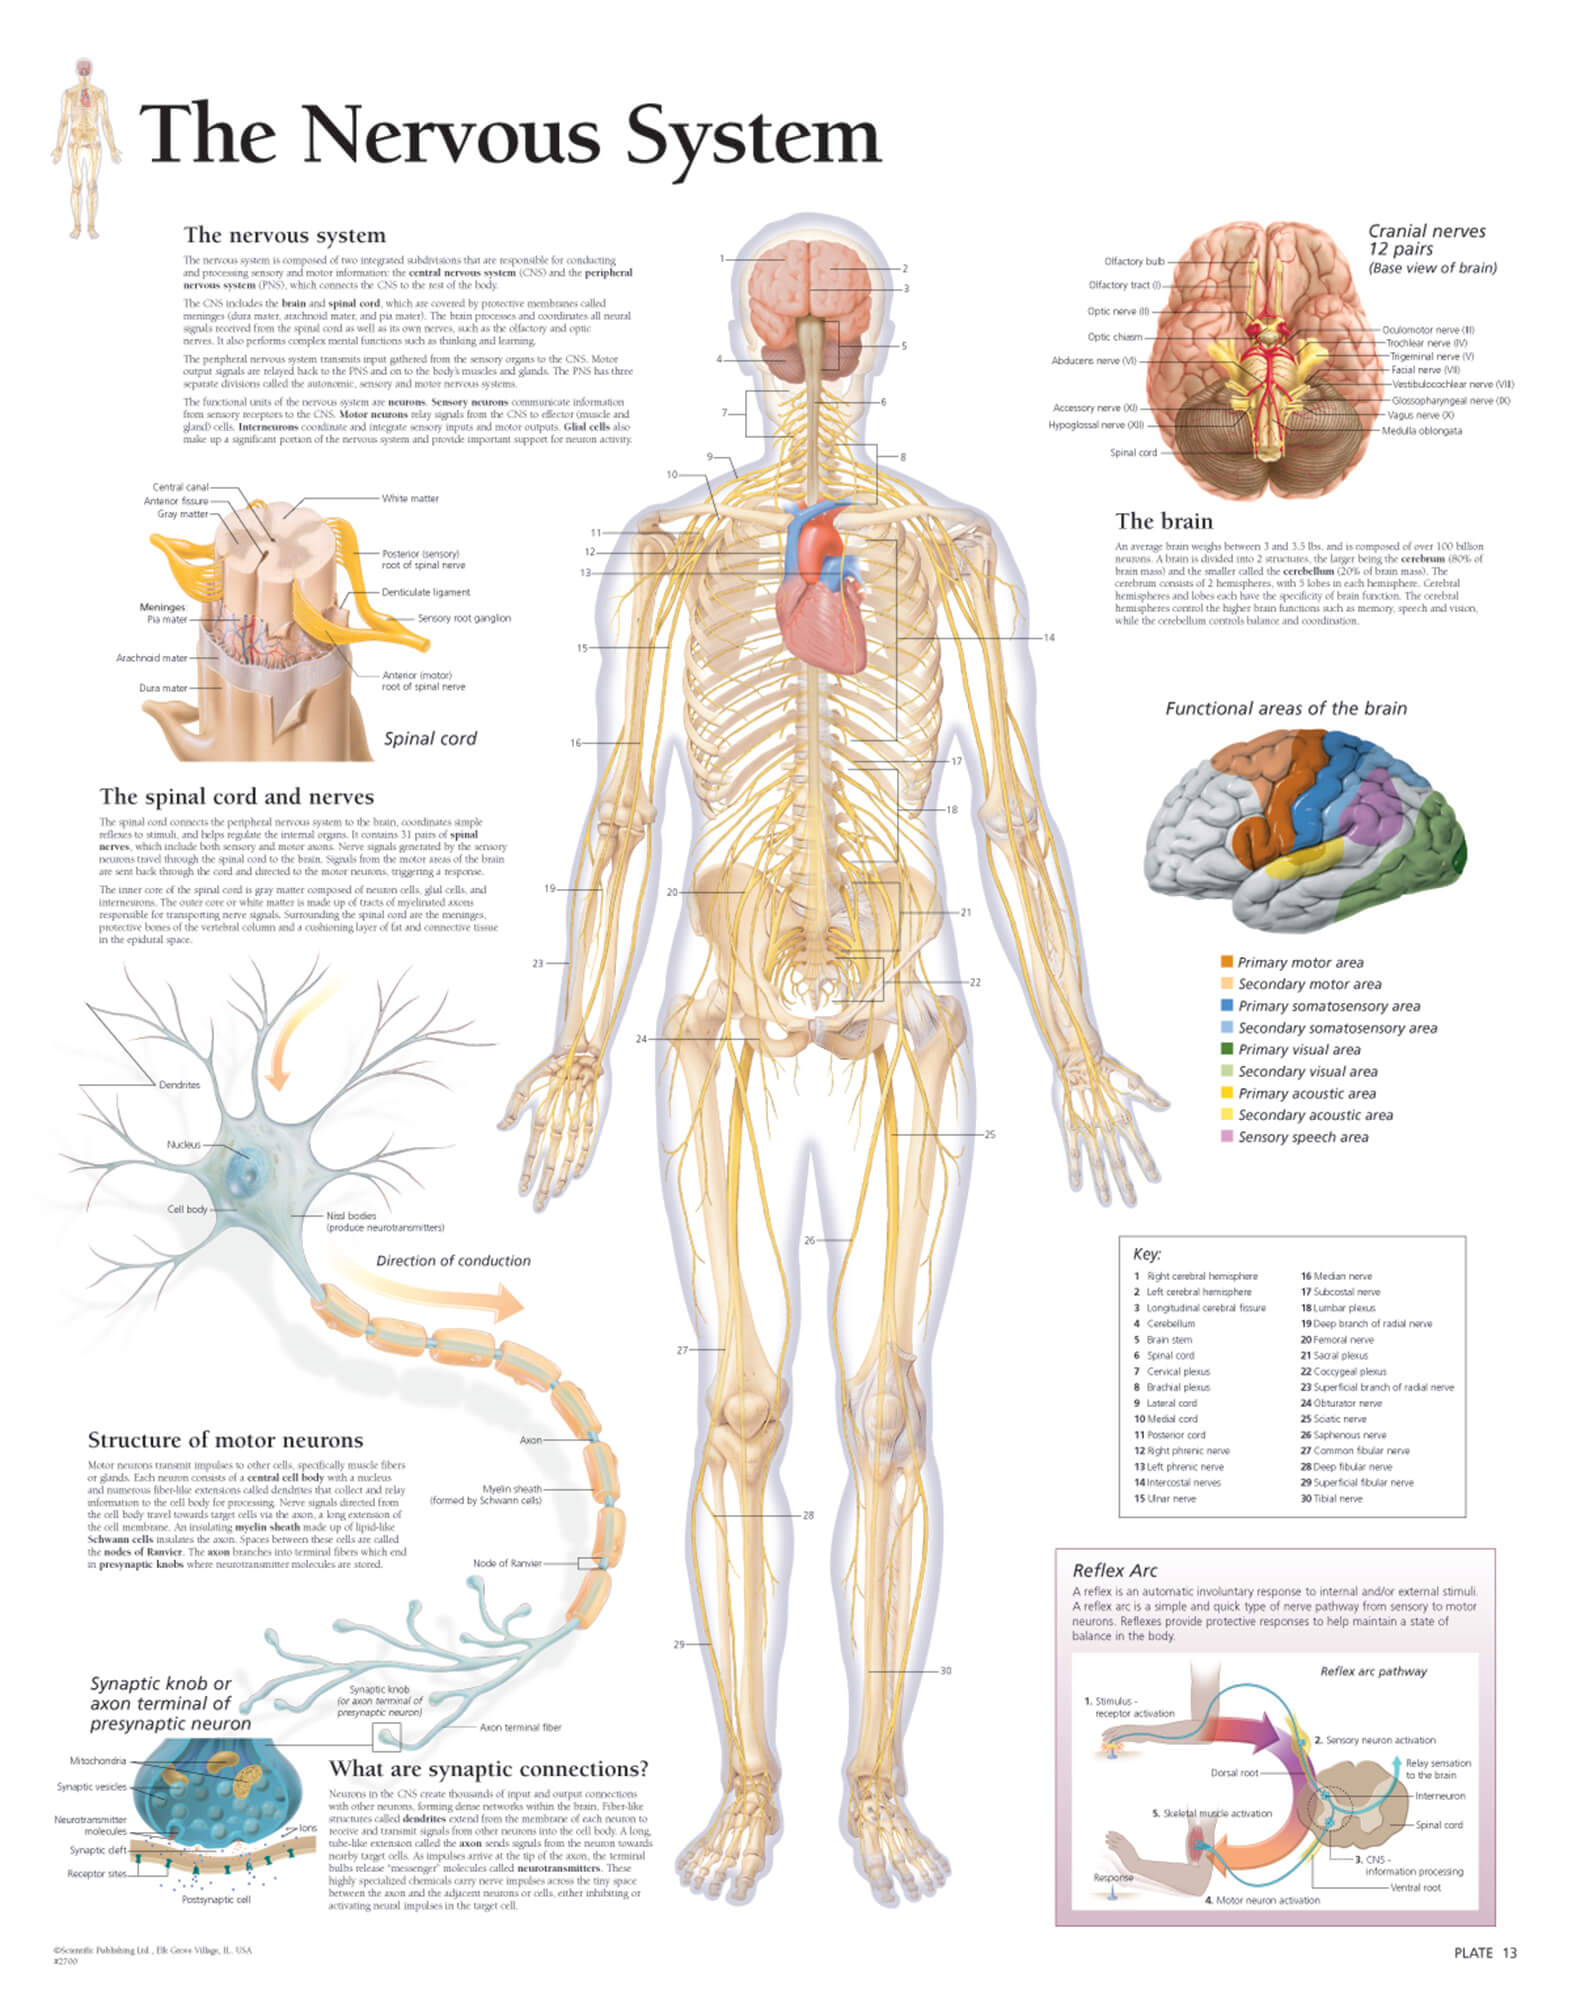 The Nervous System - Scientific Publishing